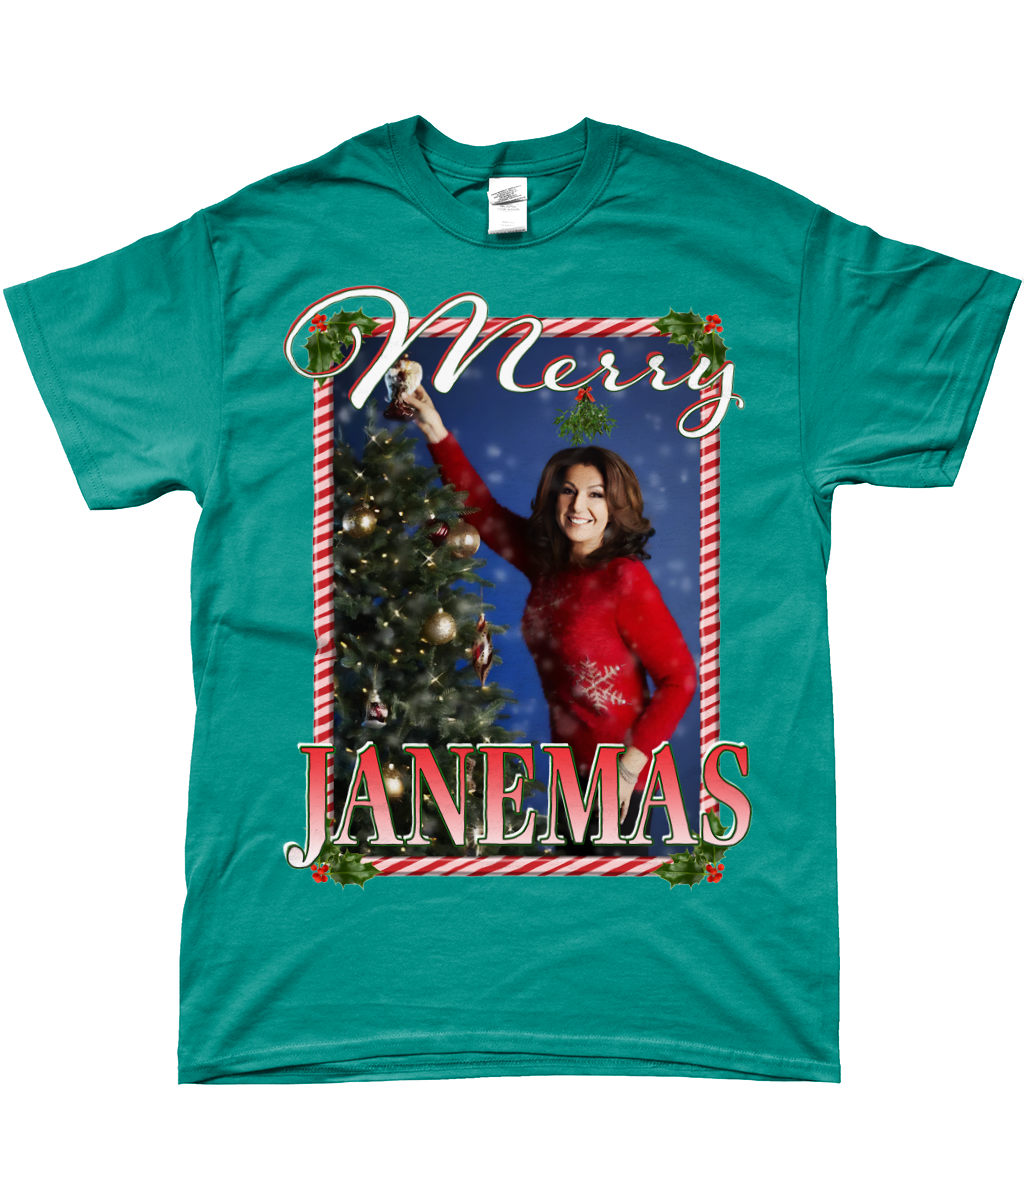 Jane McDonald Merry Janemas Text Ugly Funny Christmas T-shirt Meme TV Xmas Homage Tee Jade Dome Green Blue